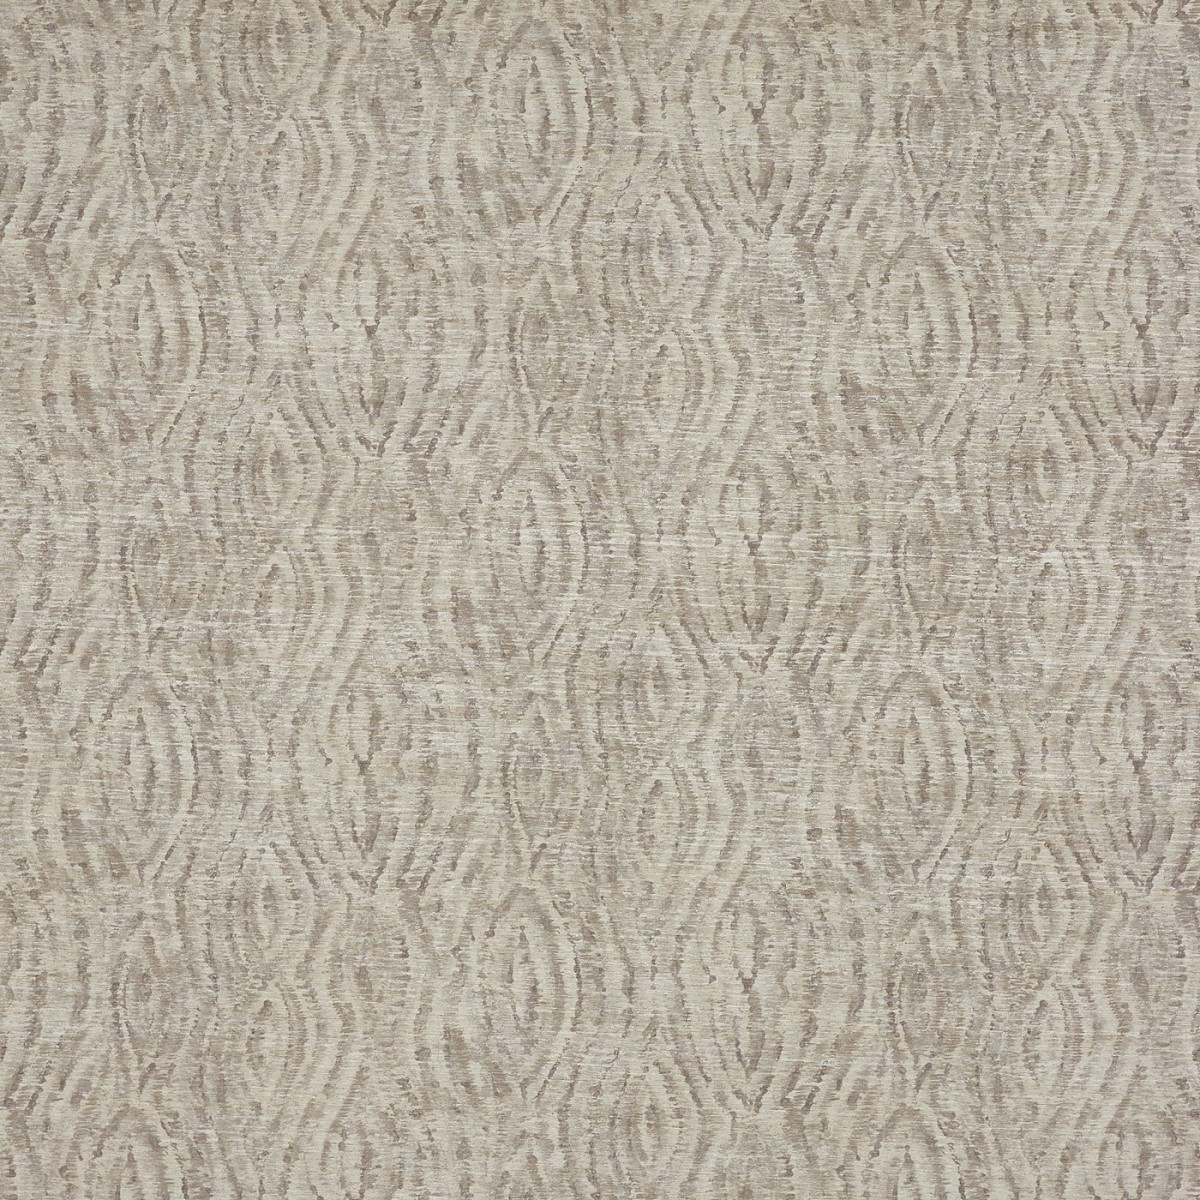 Aries Moonstone Fabric by Prestigious Textiles